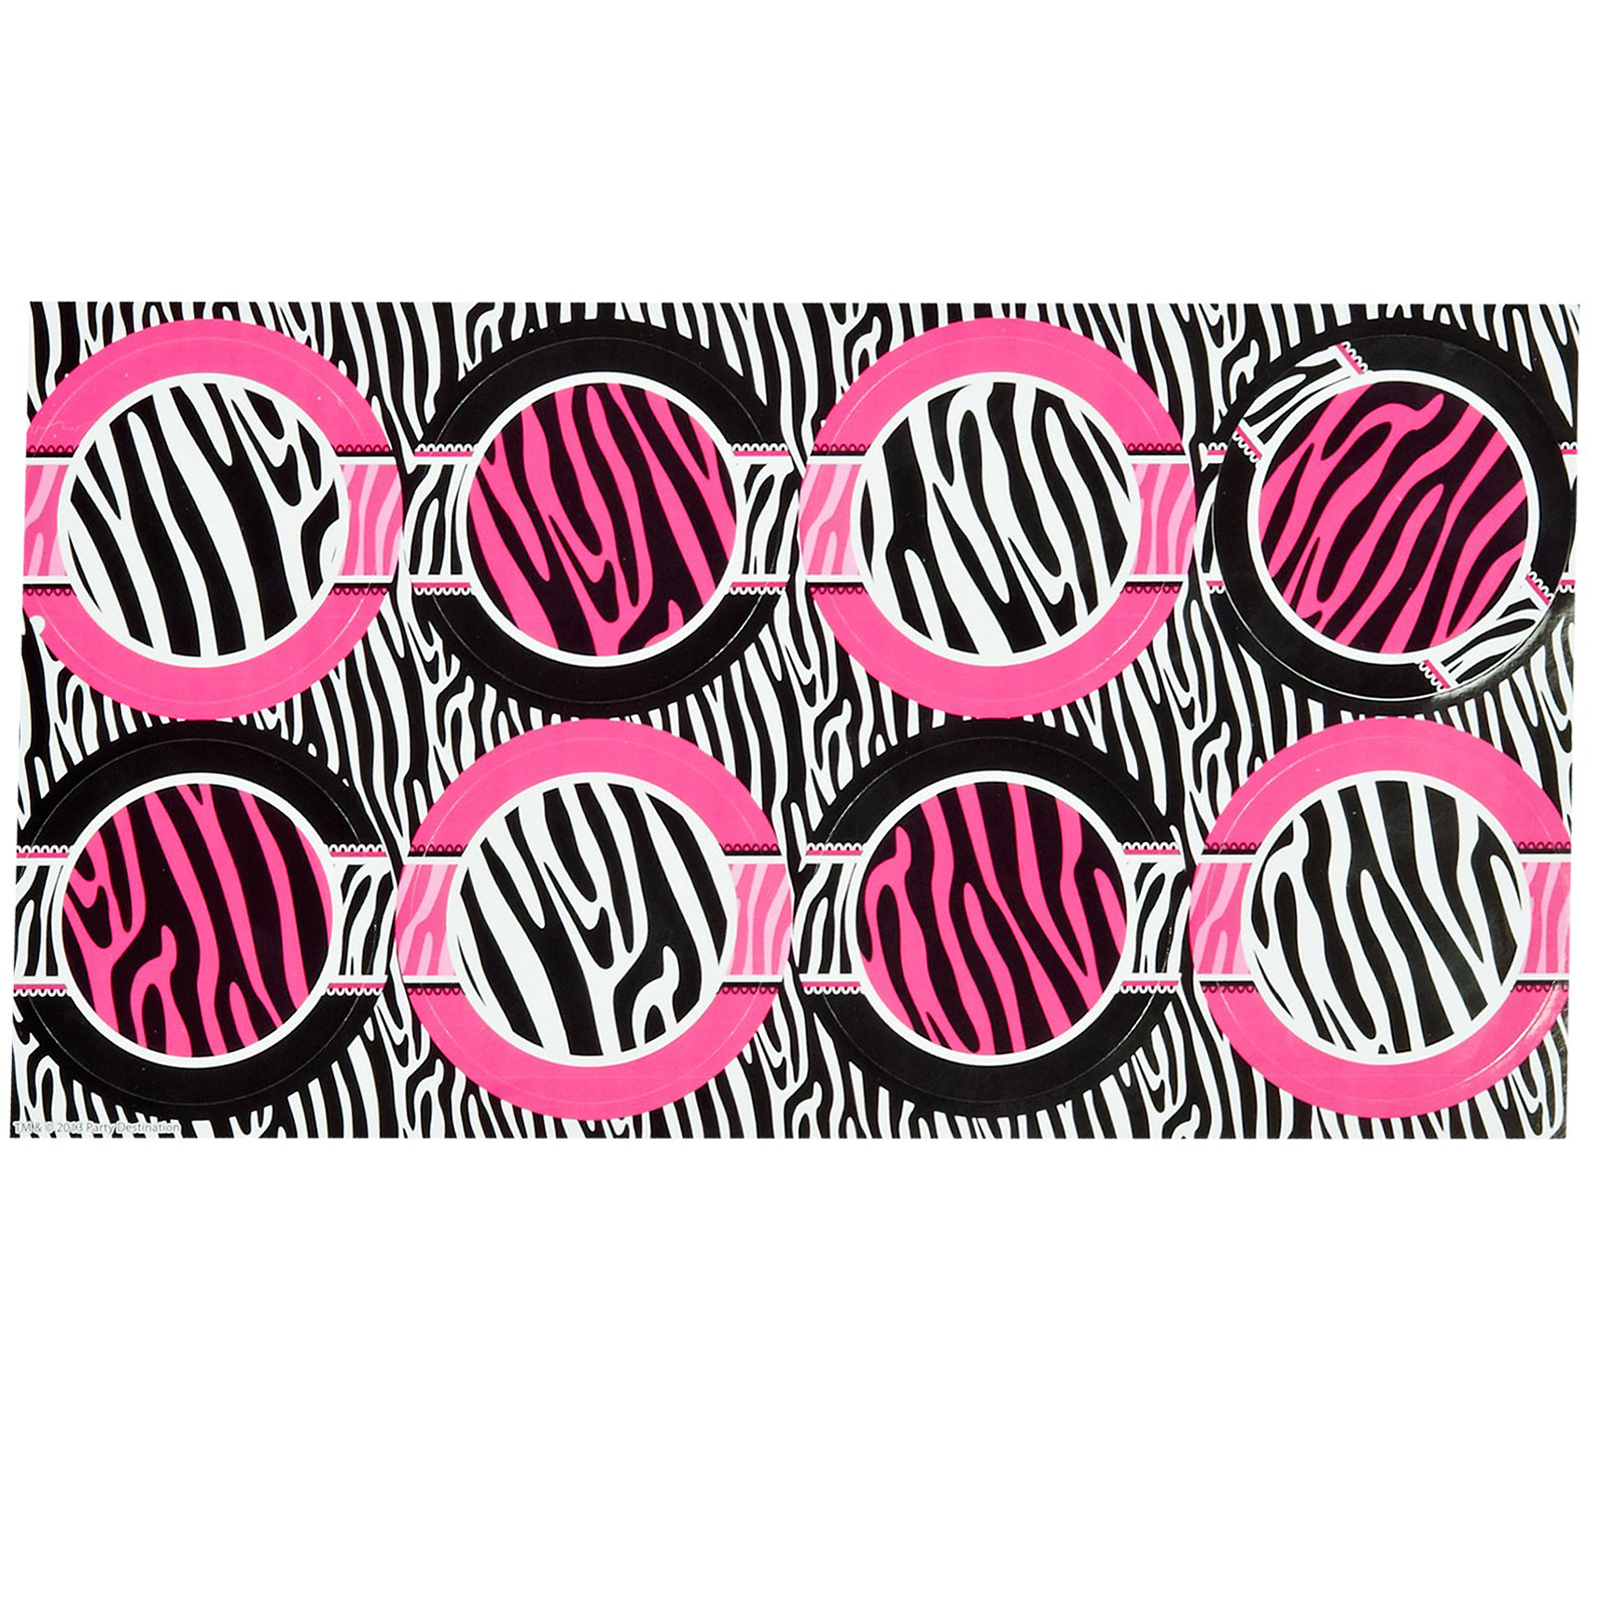 Diva Zebra Print Large Lollipop Sticker Sheet